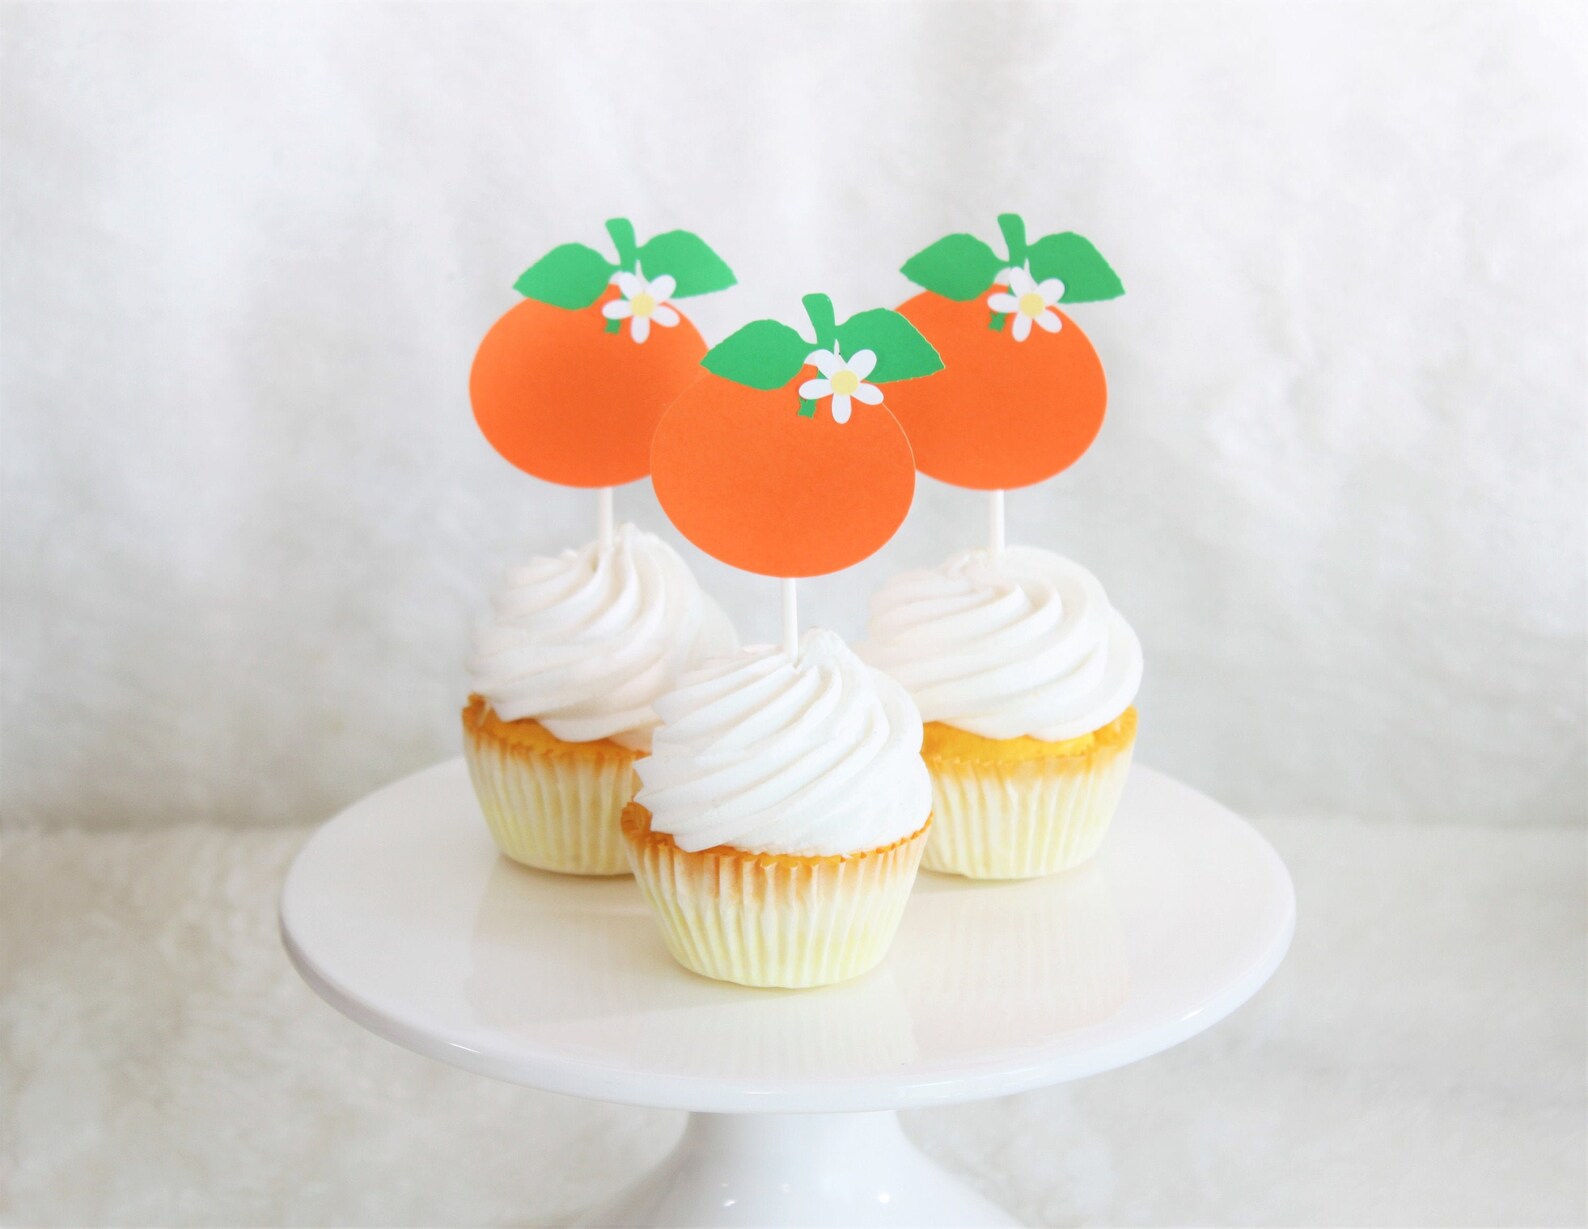 cutie cupcake baker set